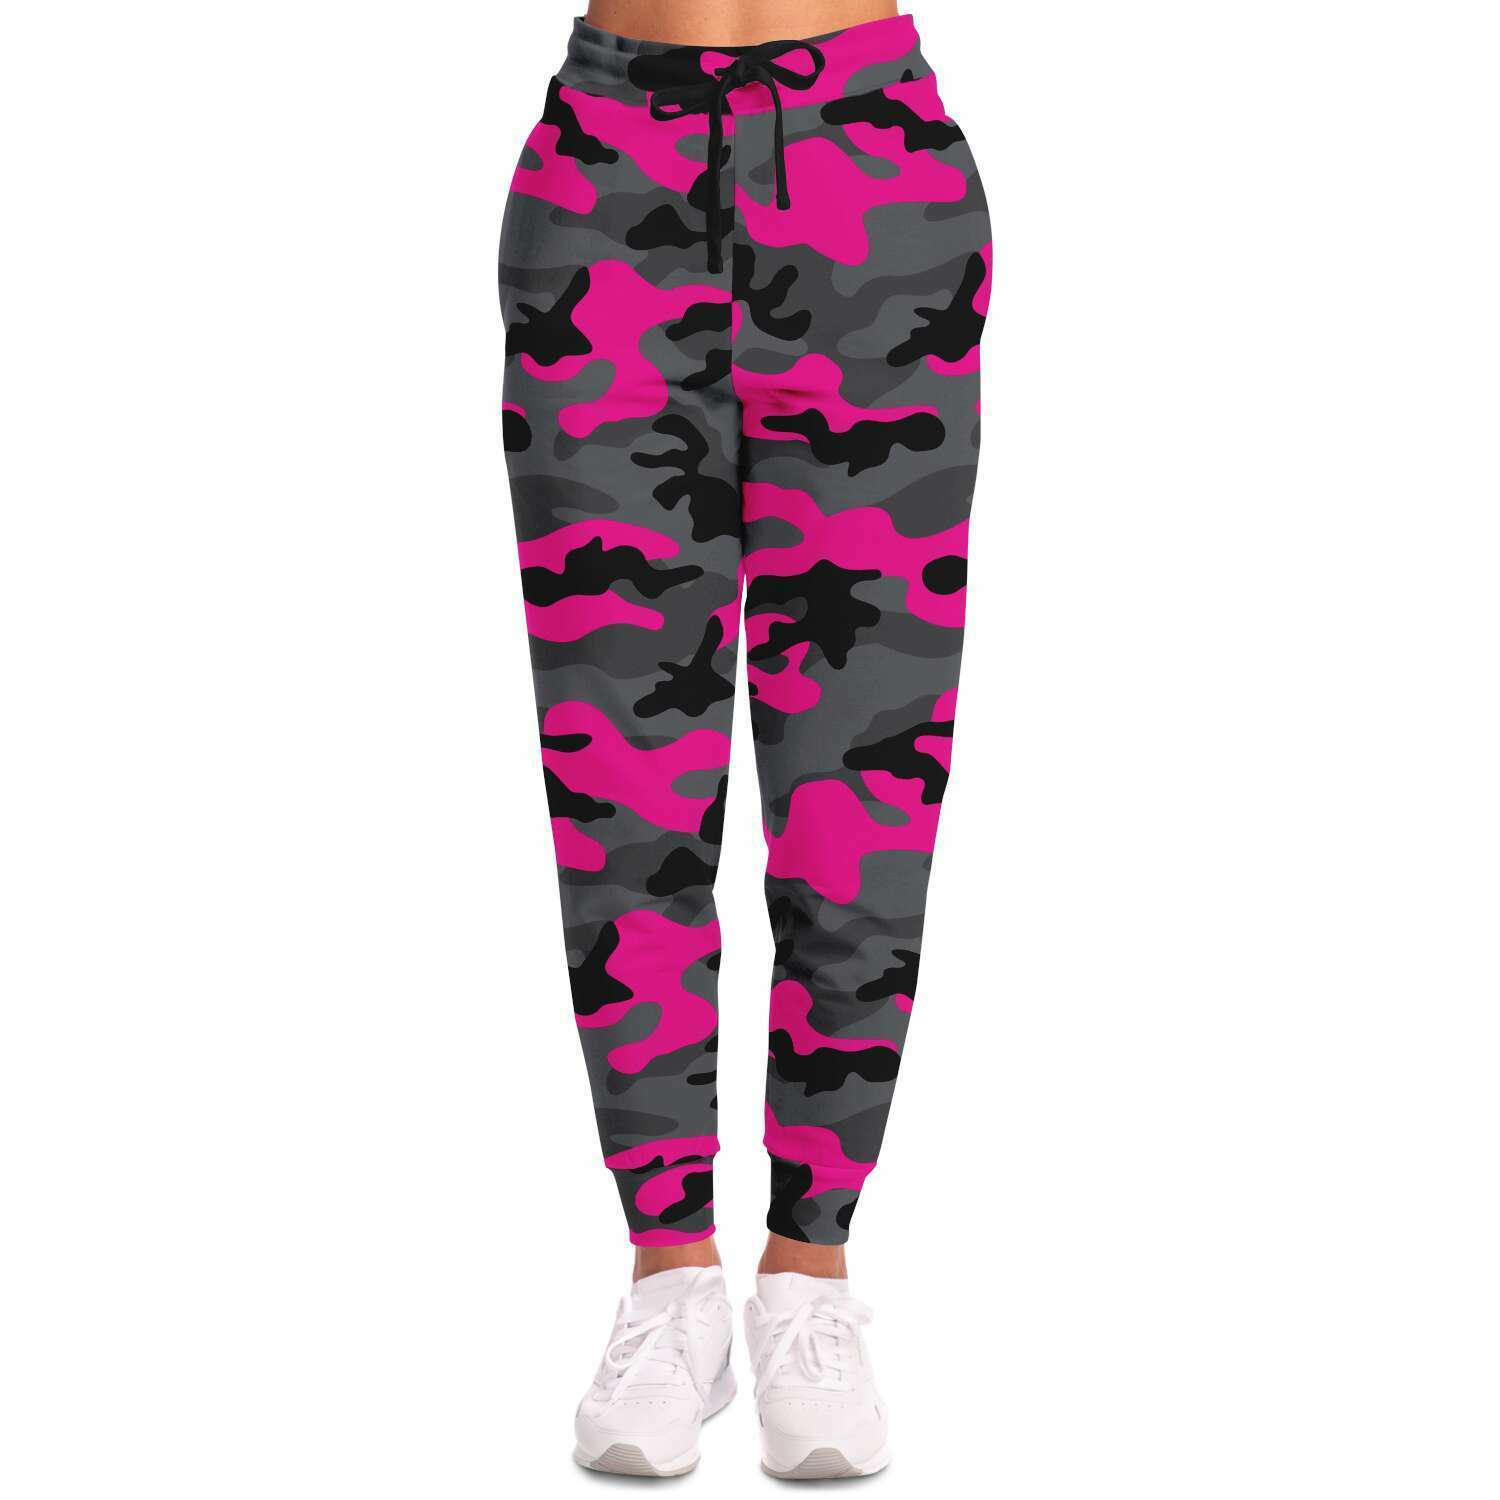 Unisex Pink Camouflage Athletic Joggers